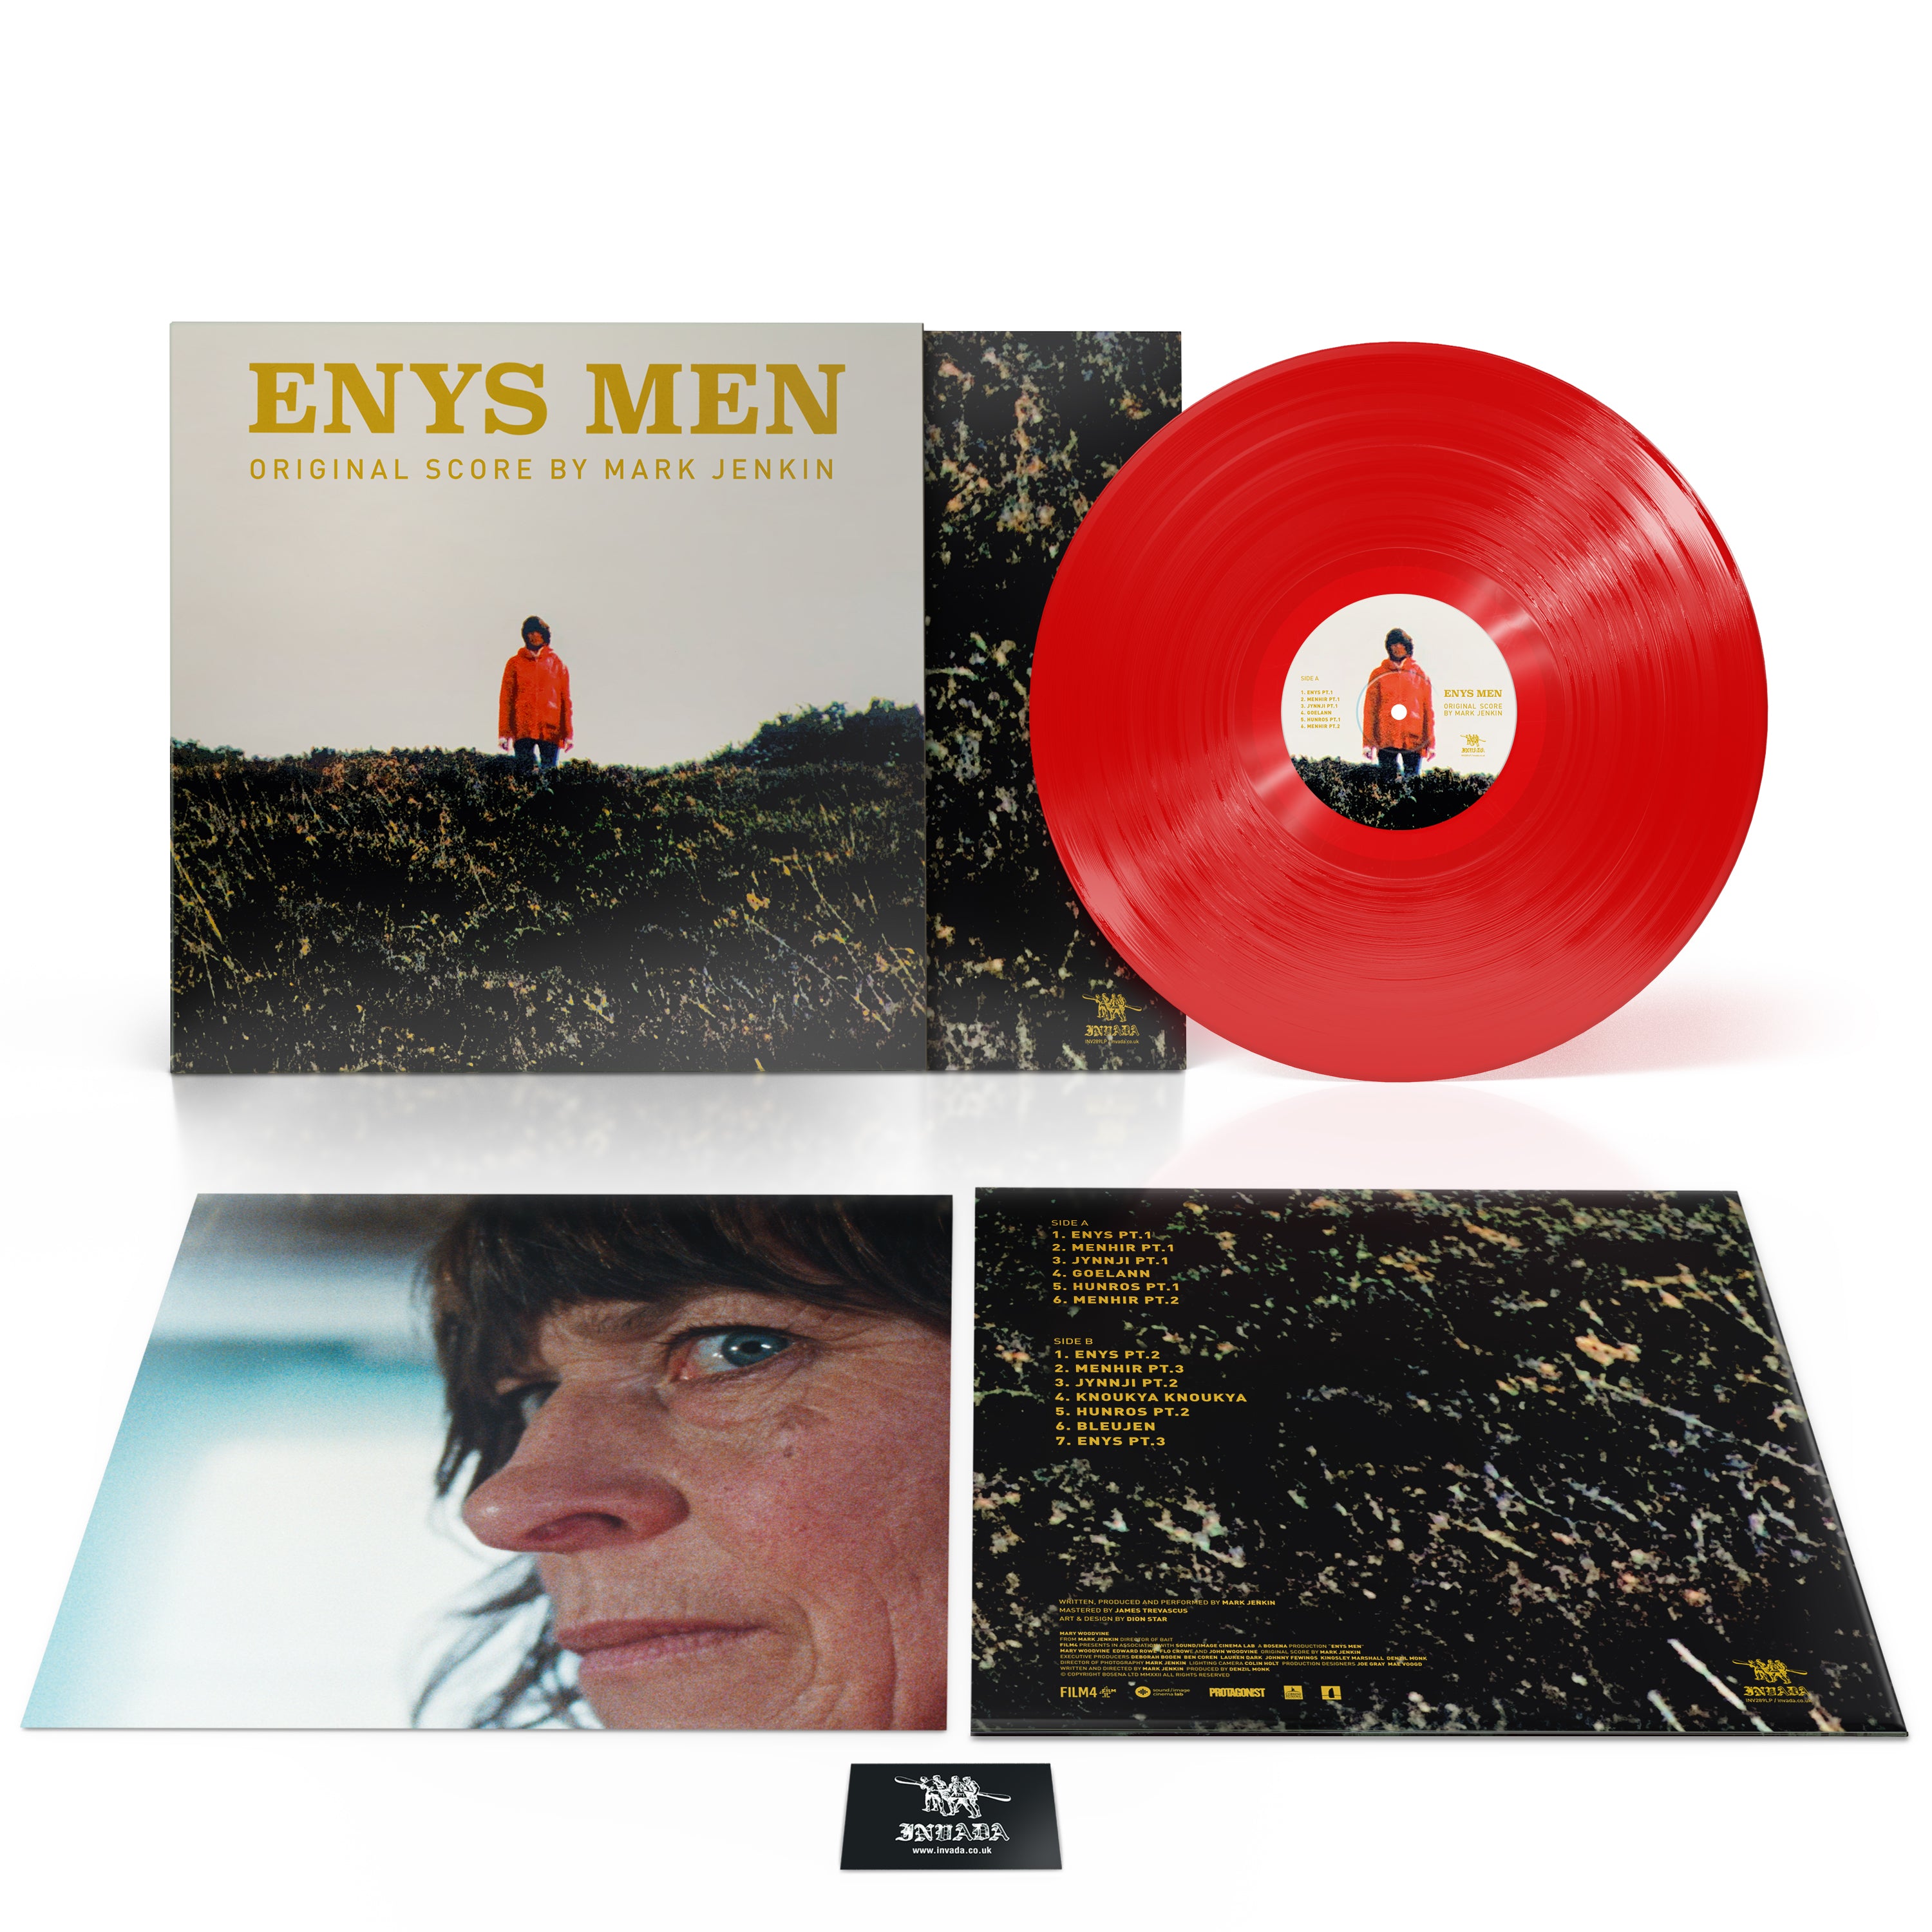 Mark Jenkin - Enys Men (Original Score): Limited Edition Red Vinyl LP